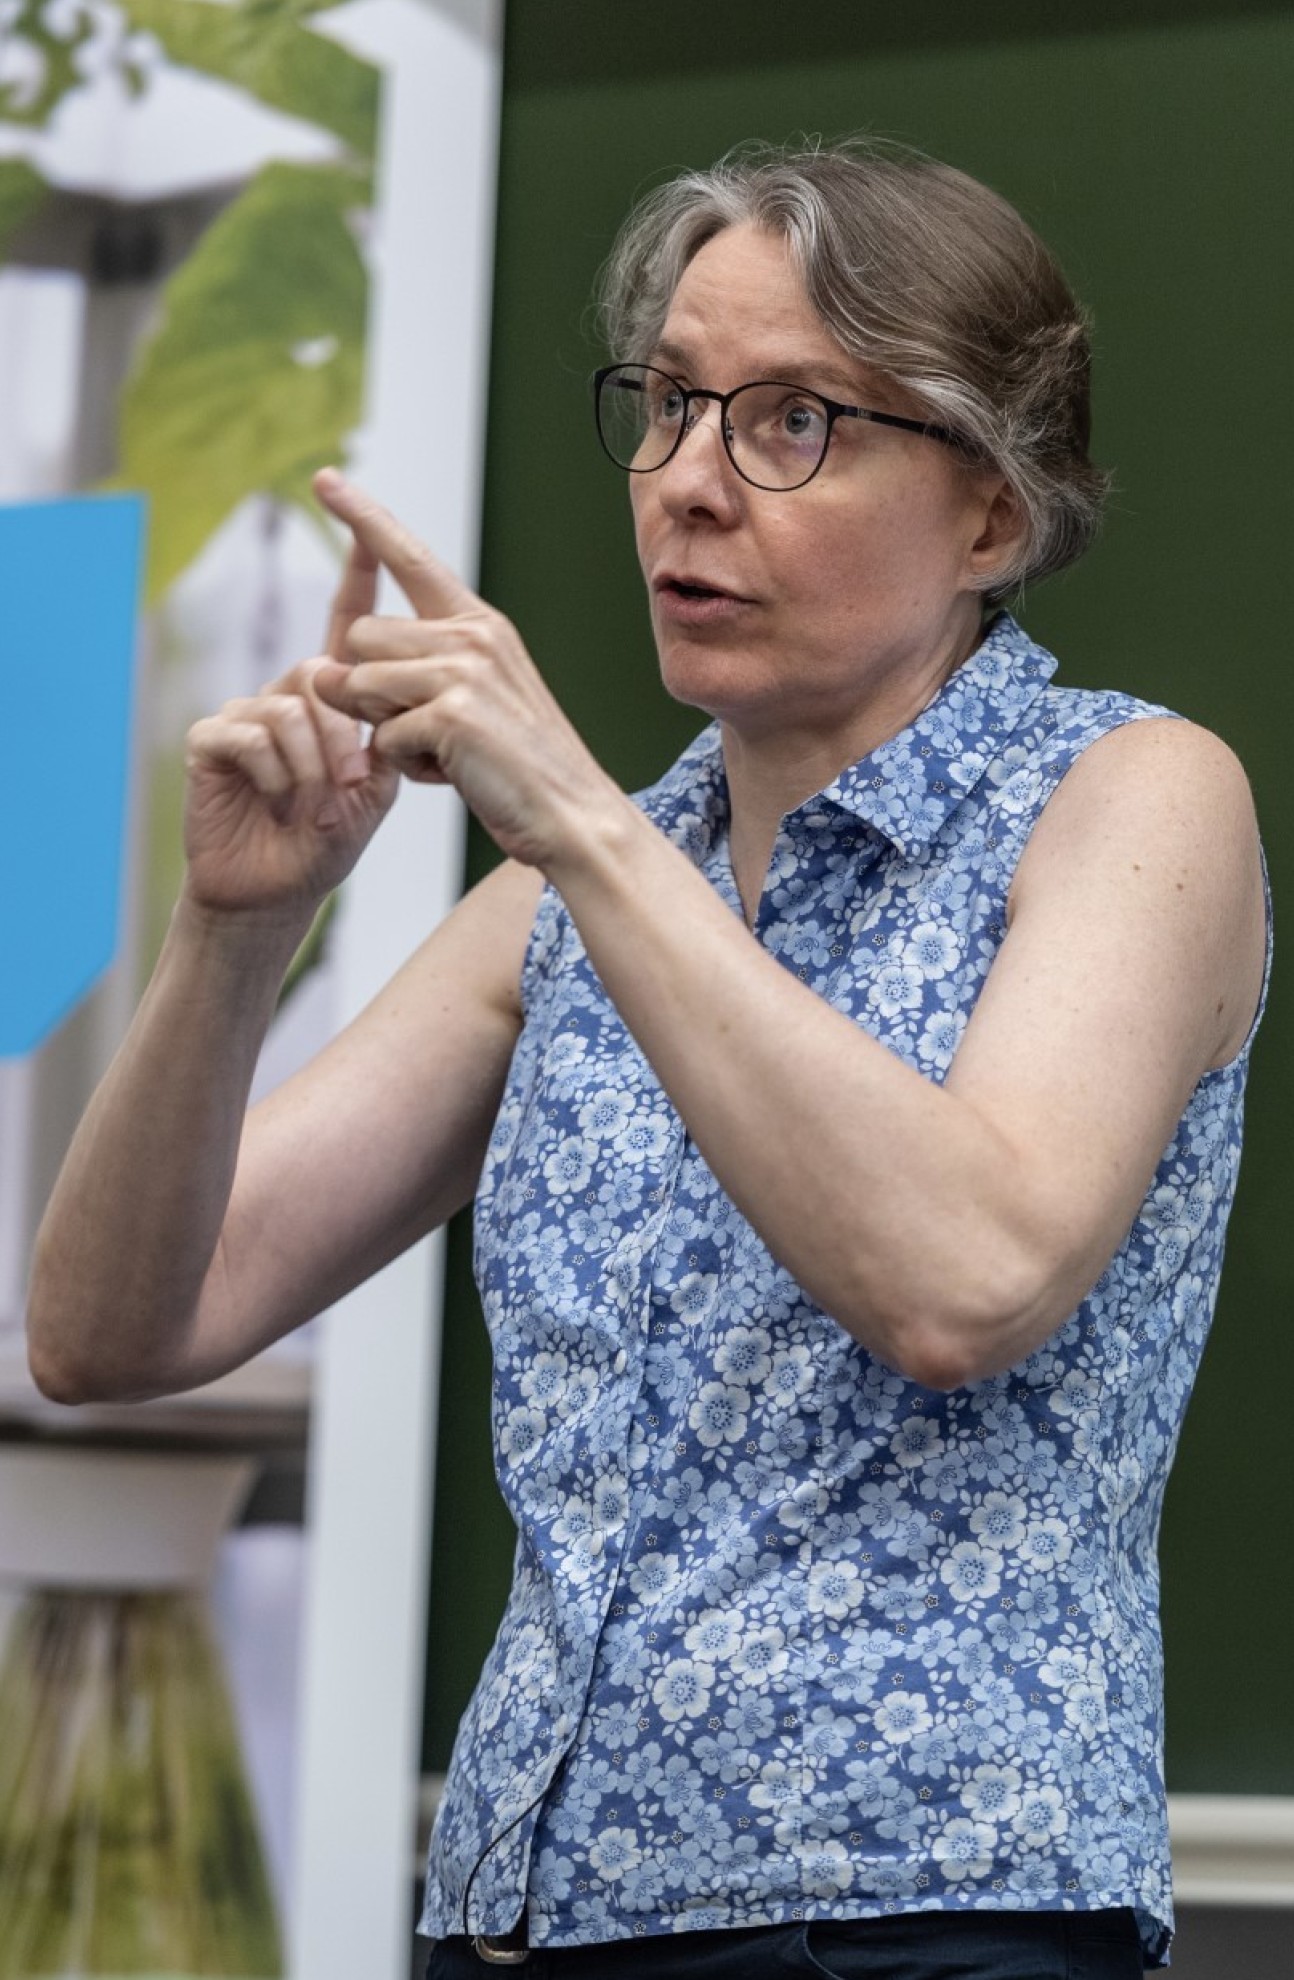 Professor Marina Galand